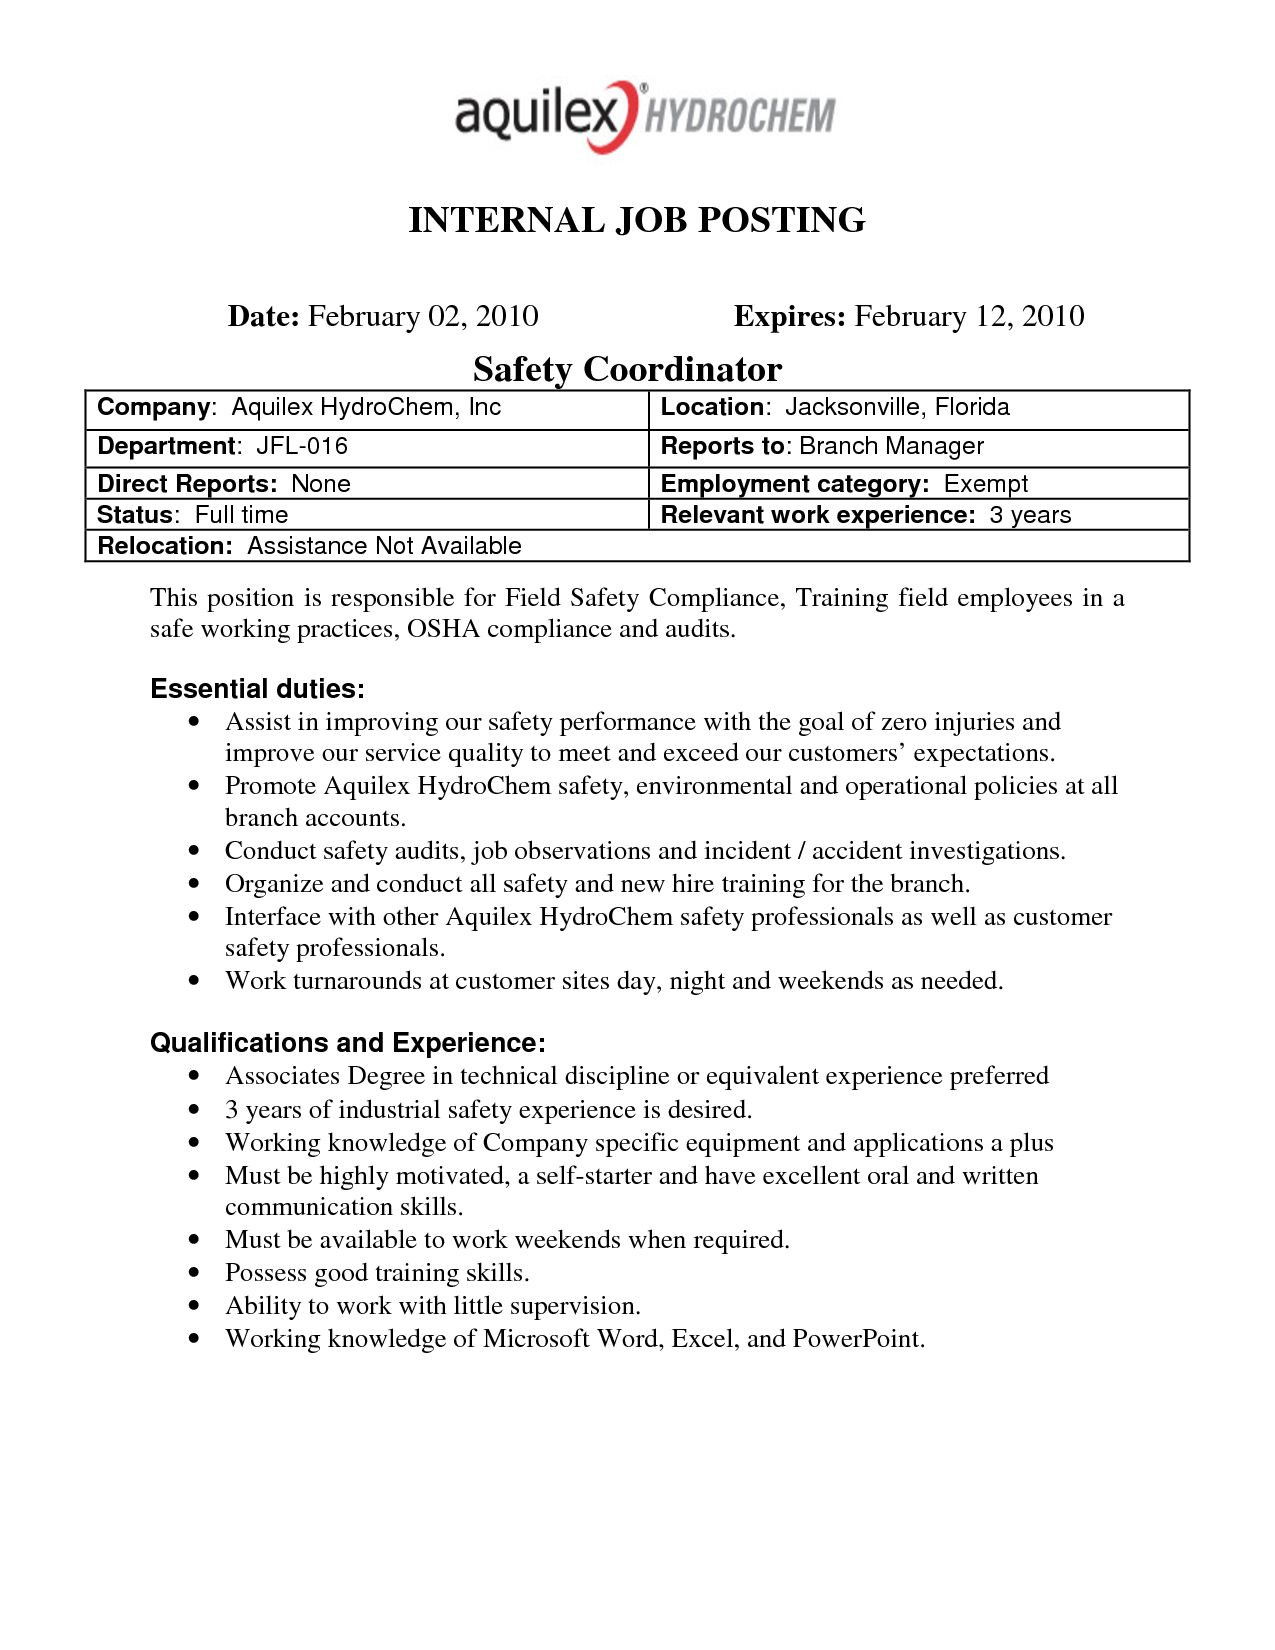 Resume Template for Internal Job Posting the Extraordinary Best Photos Of Internal Job Posting Template …